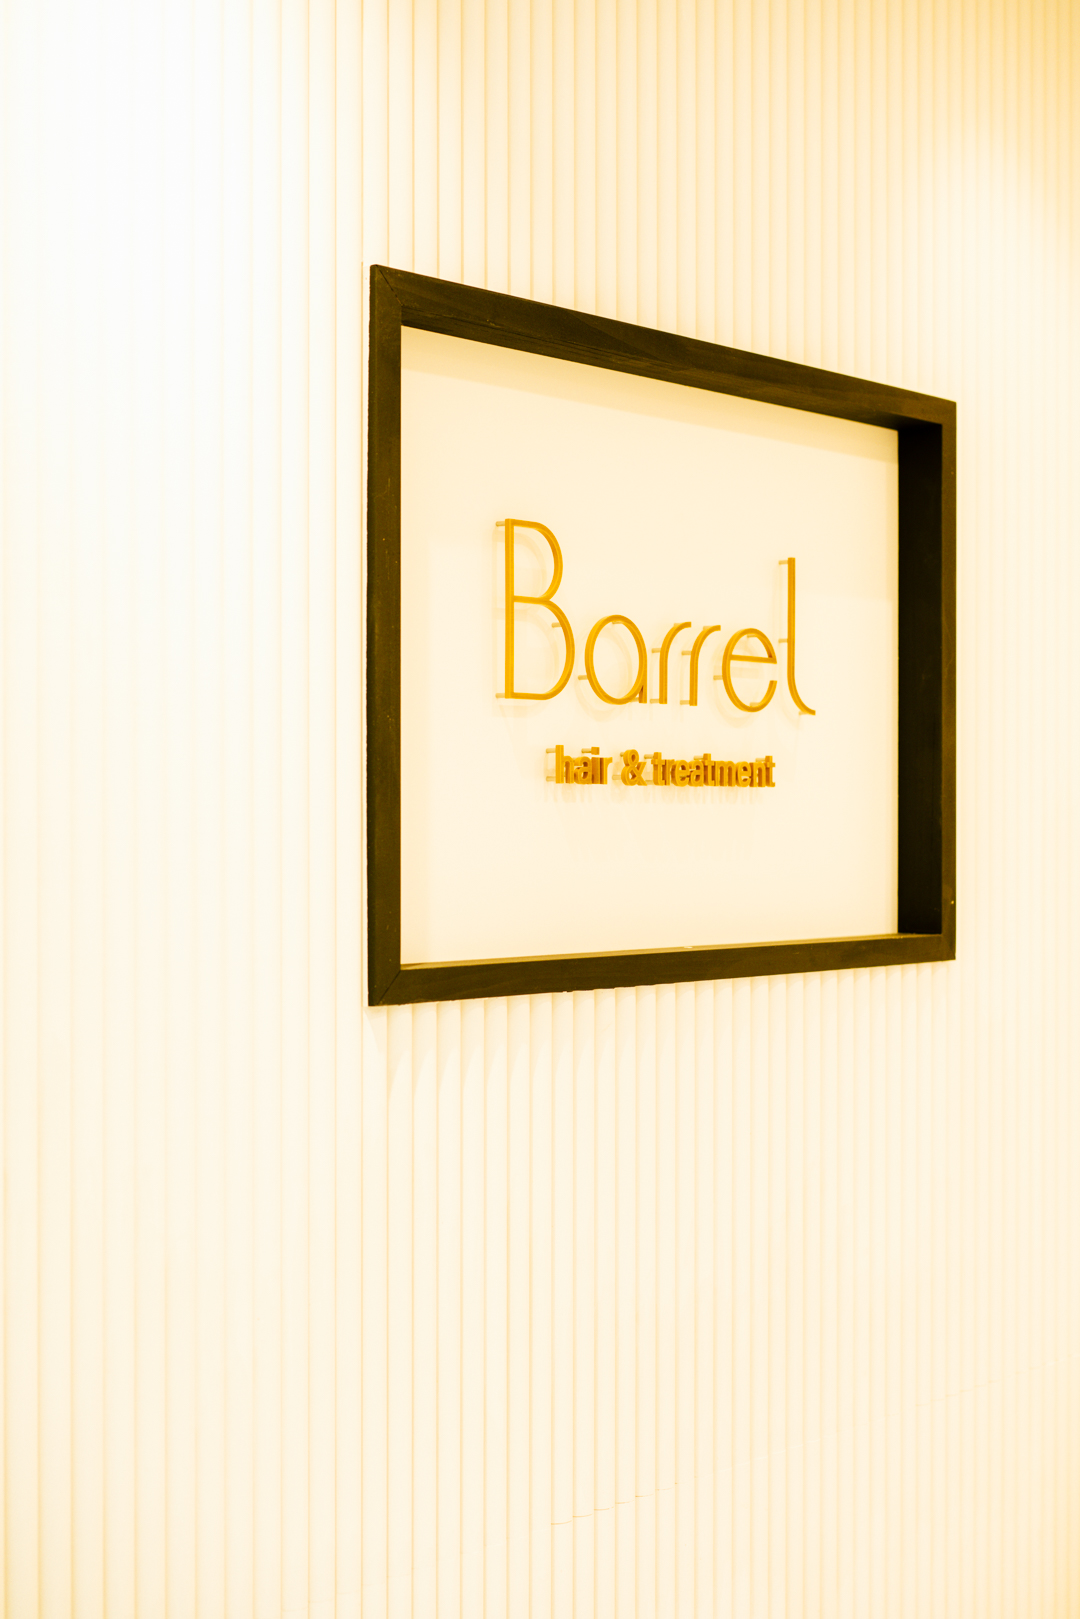 barrel hair&treatment